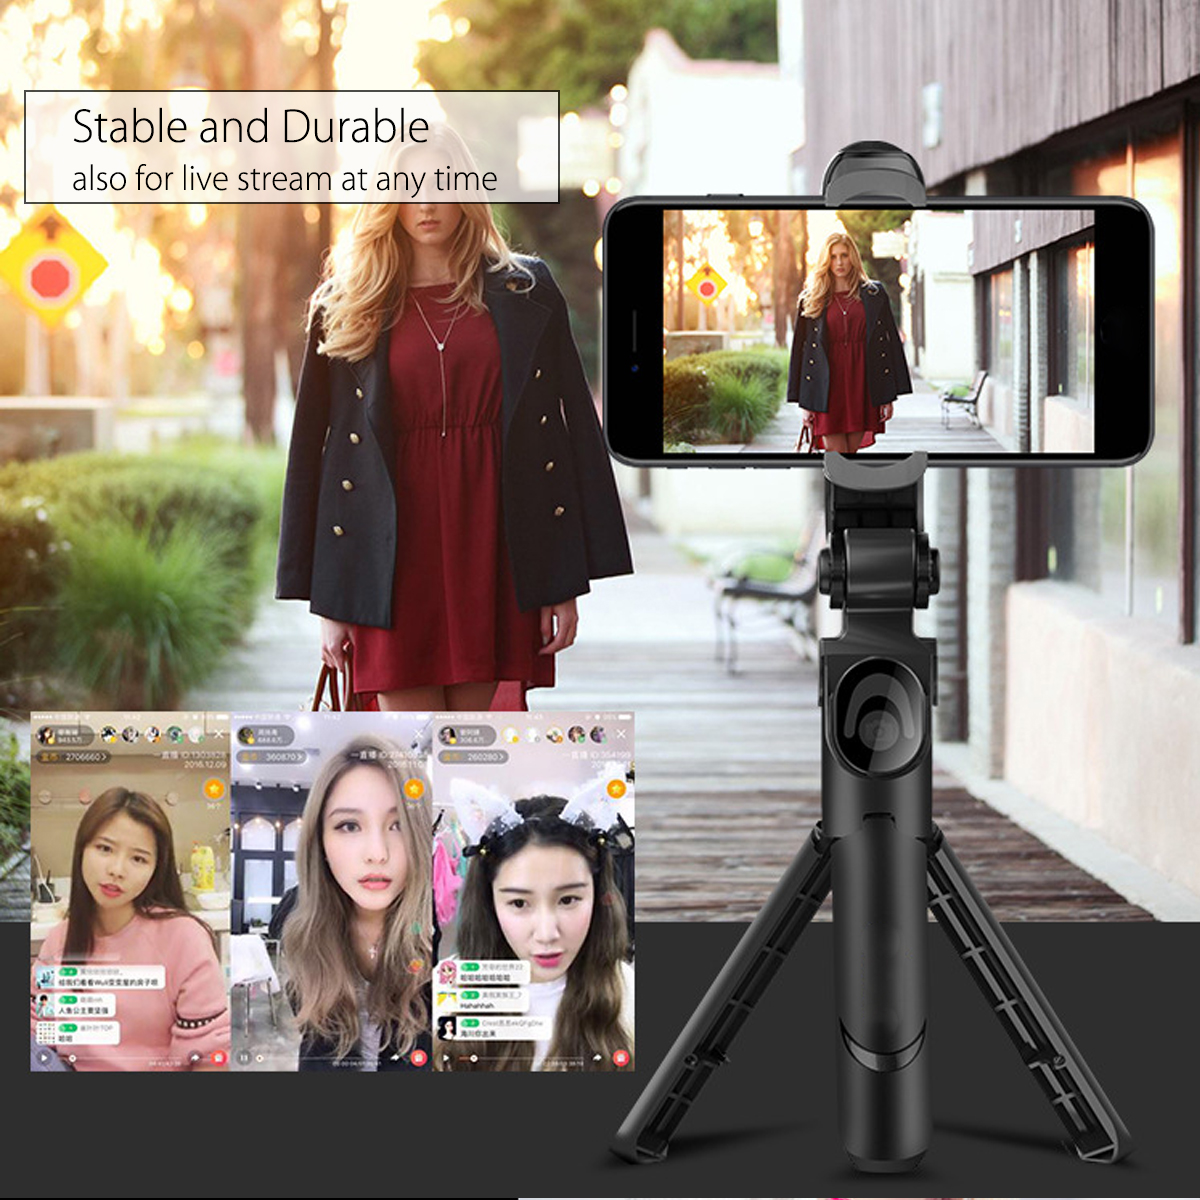 Bakeey-360-Degree-Selfie-Stick-Tripod-Desktop-Phone-Holder-with-bluetooth-Remote-Control-1293454-3